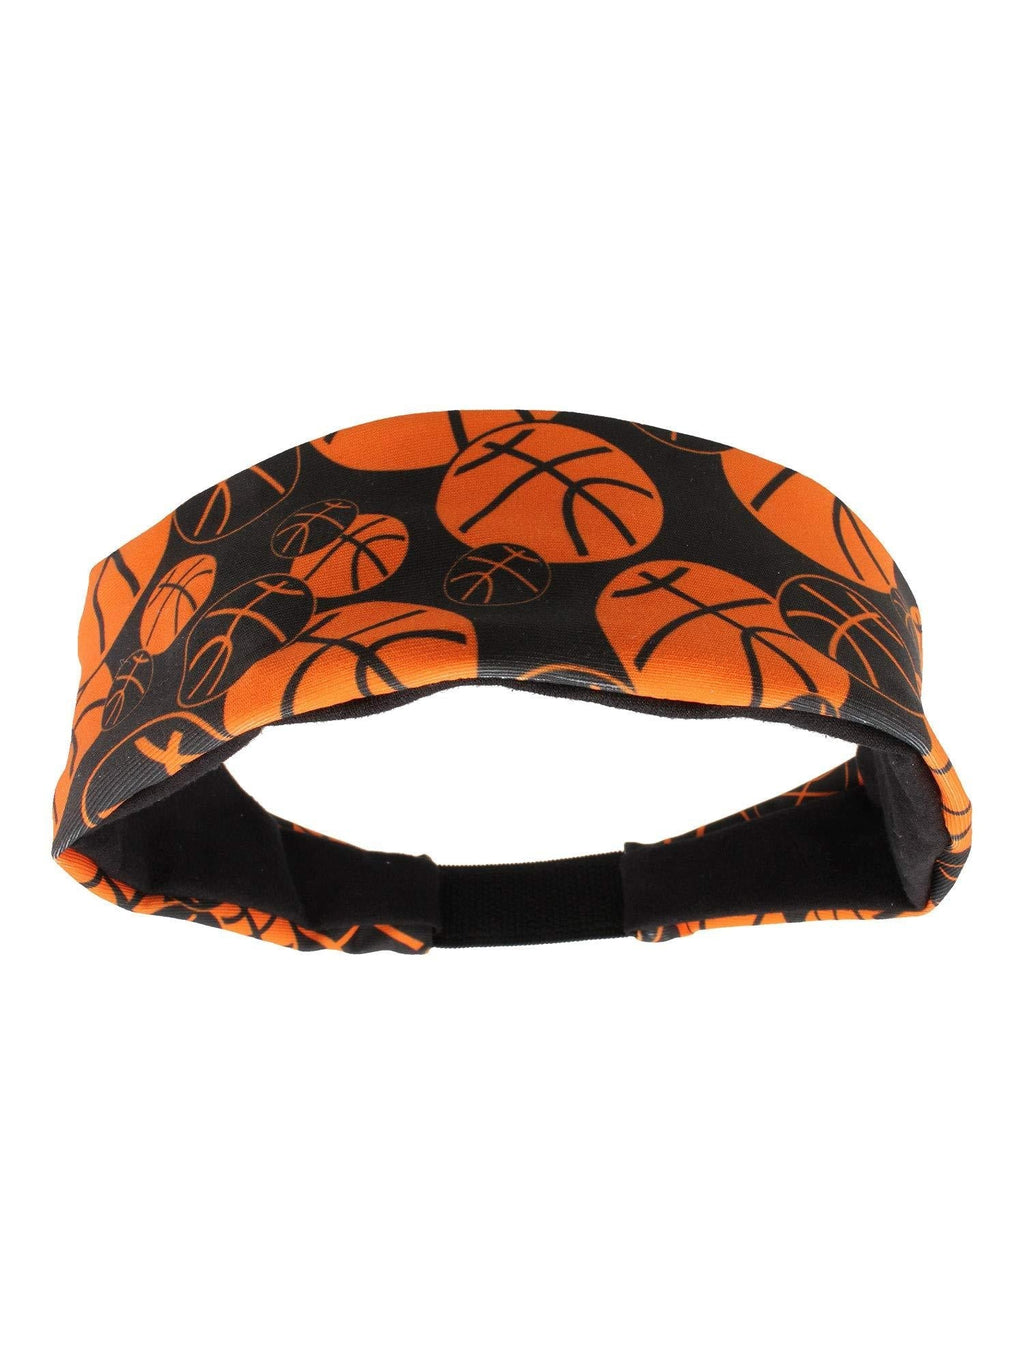 MadSportsStuff Crazy Girls Basketball Headband with Basketball Logos Black/Orange One Size - BeesActive Australia